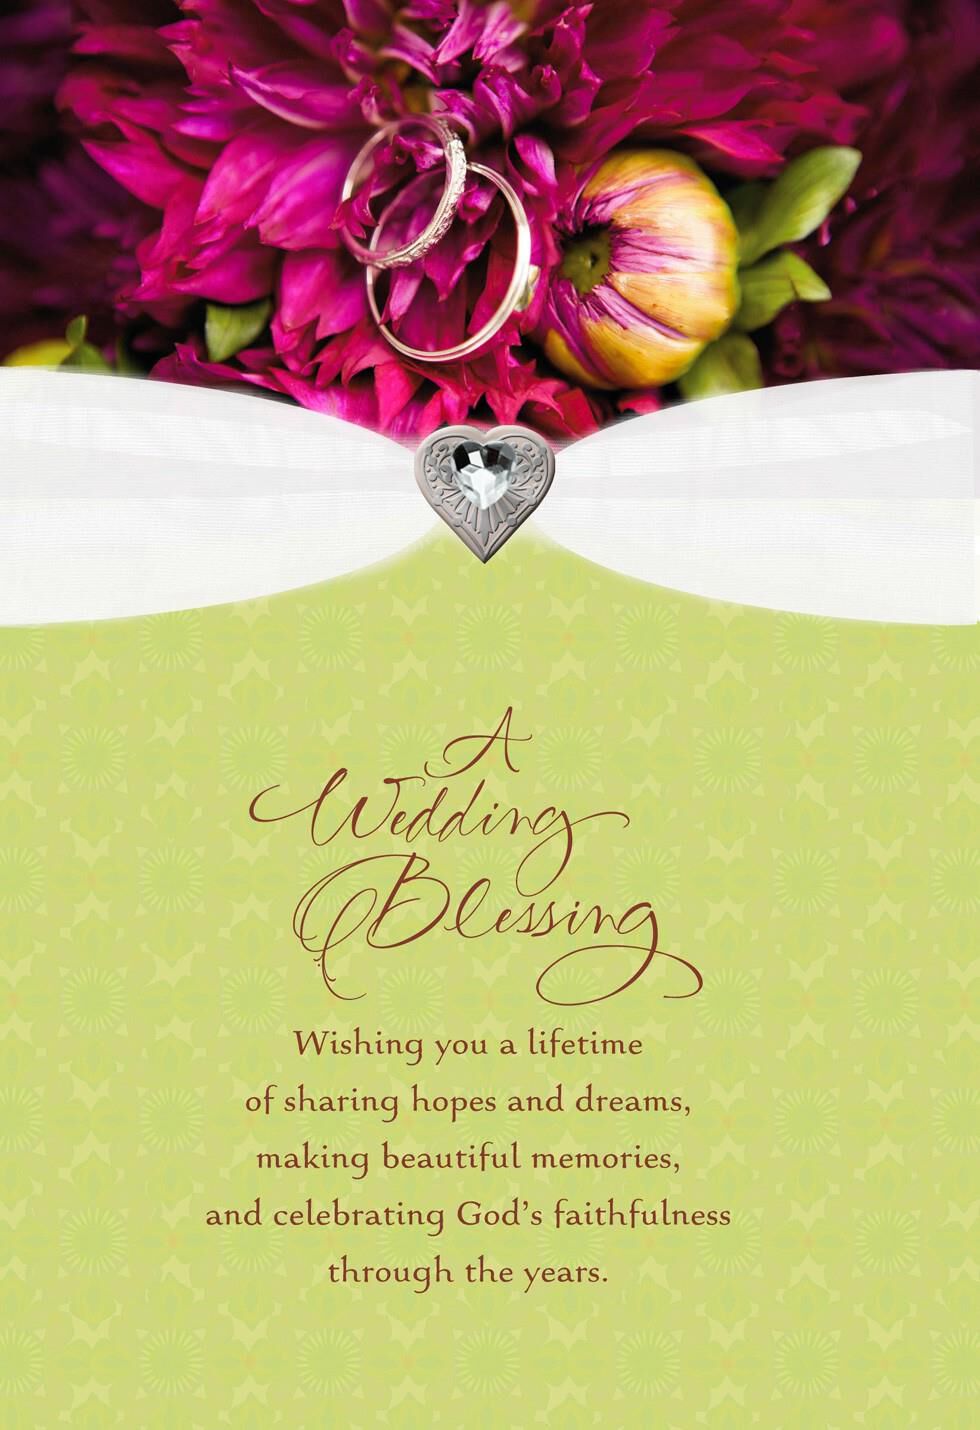  Wedding Blessing Religious Wedding Card - Greeting Cards - Hallmark